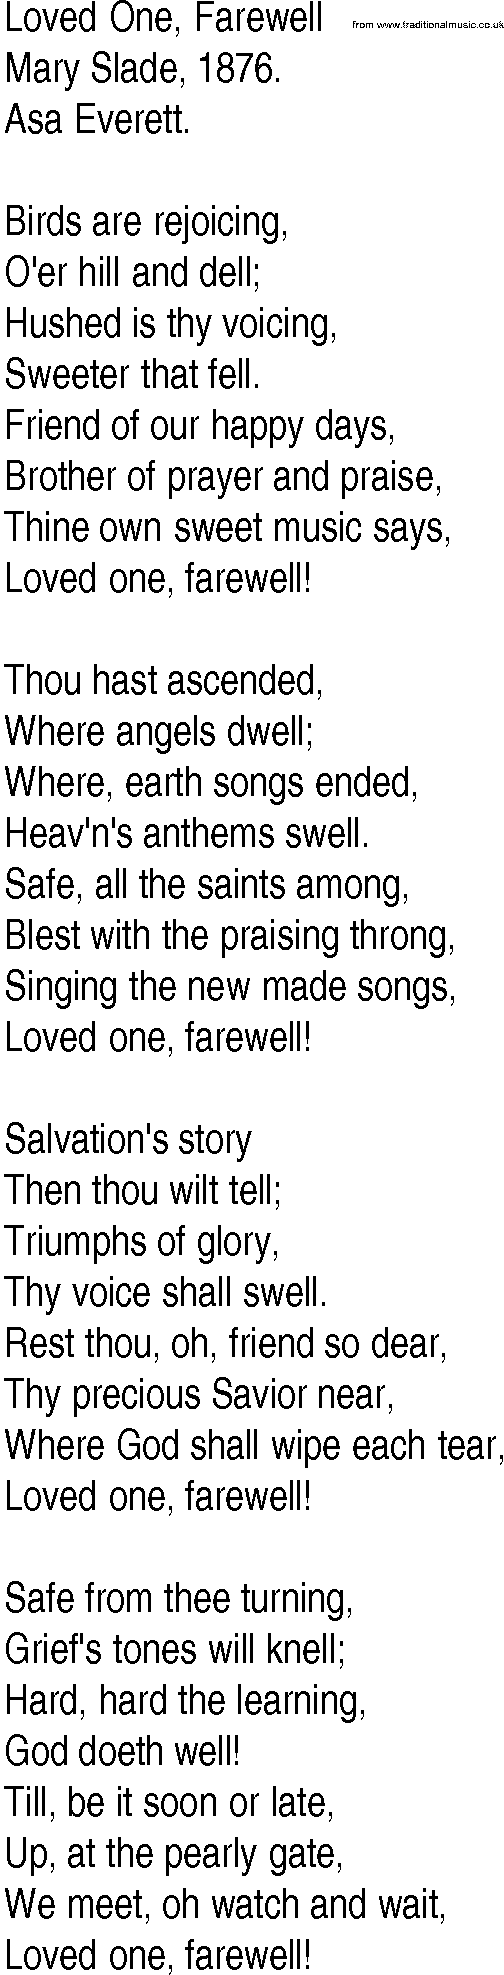 Hymn and Gospel Song: Loved One, Farewell by Mary Slade lyrics